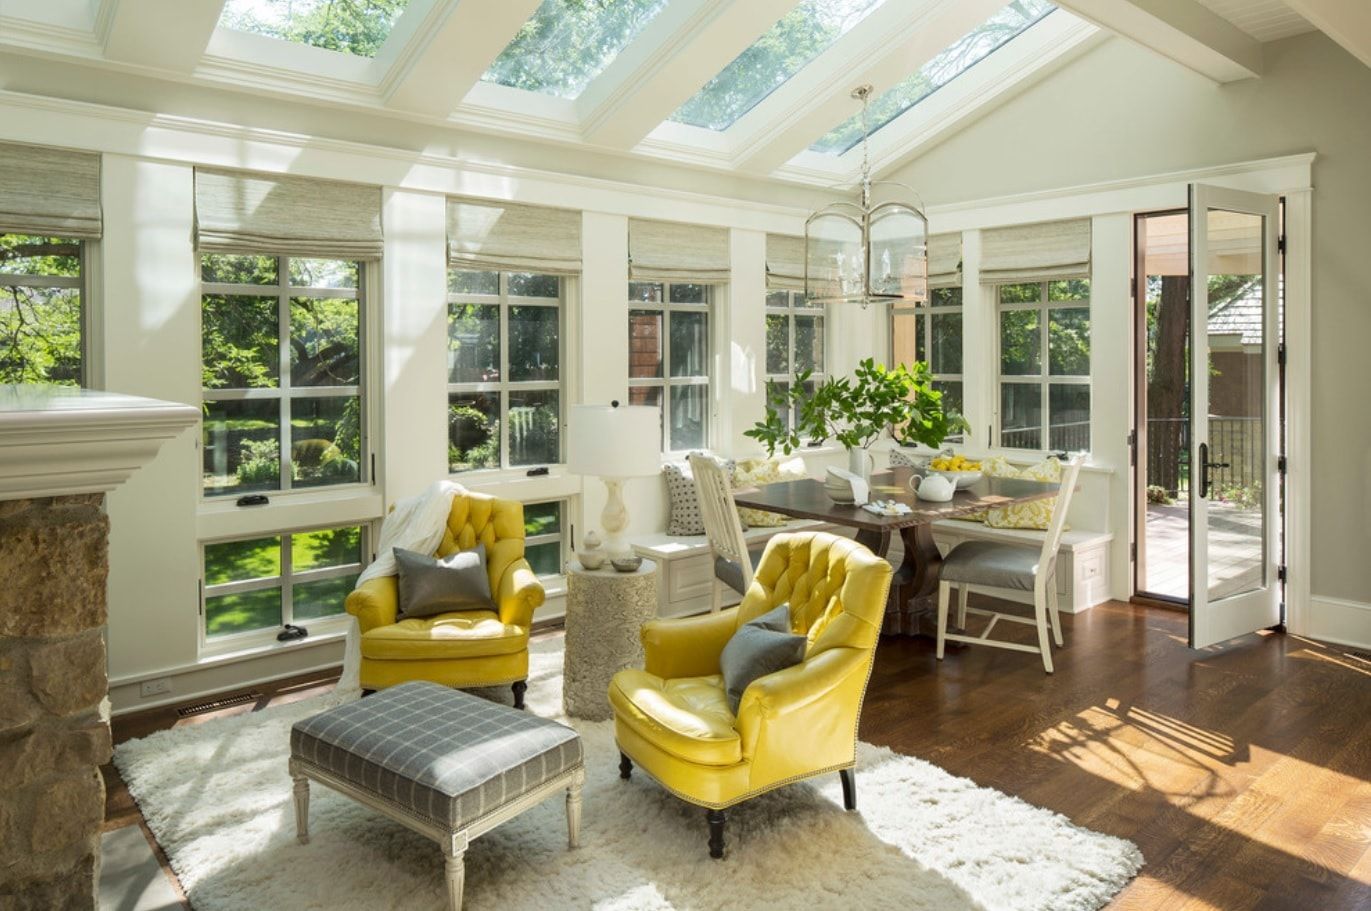 Gorgeous Retro designed interiro of the fully glazed sunroom